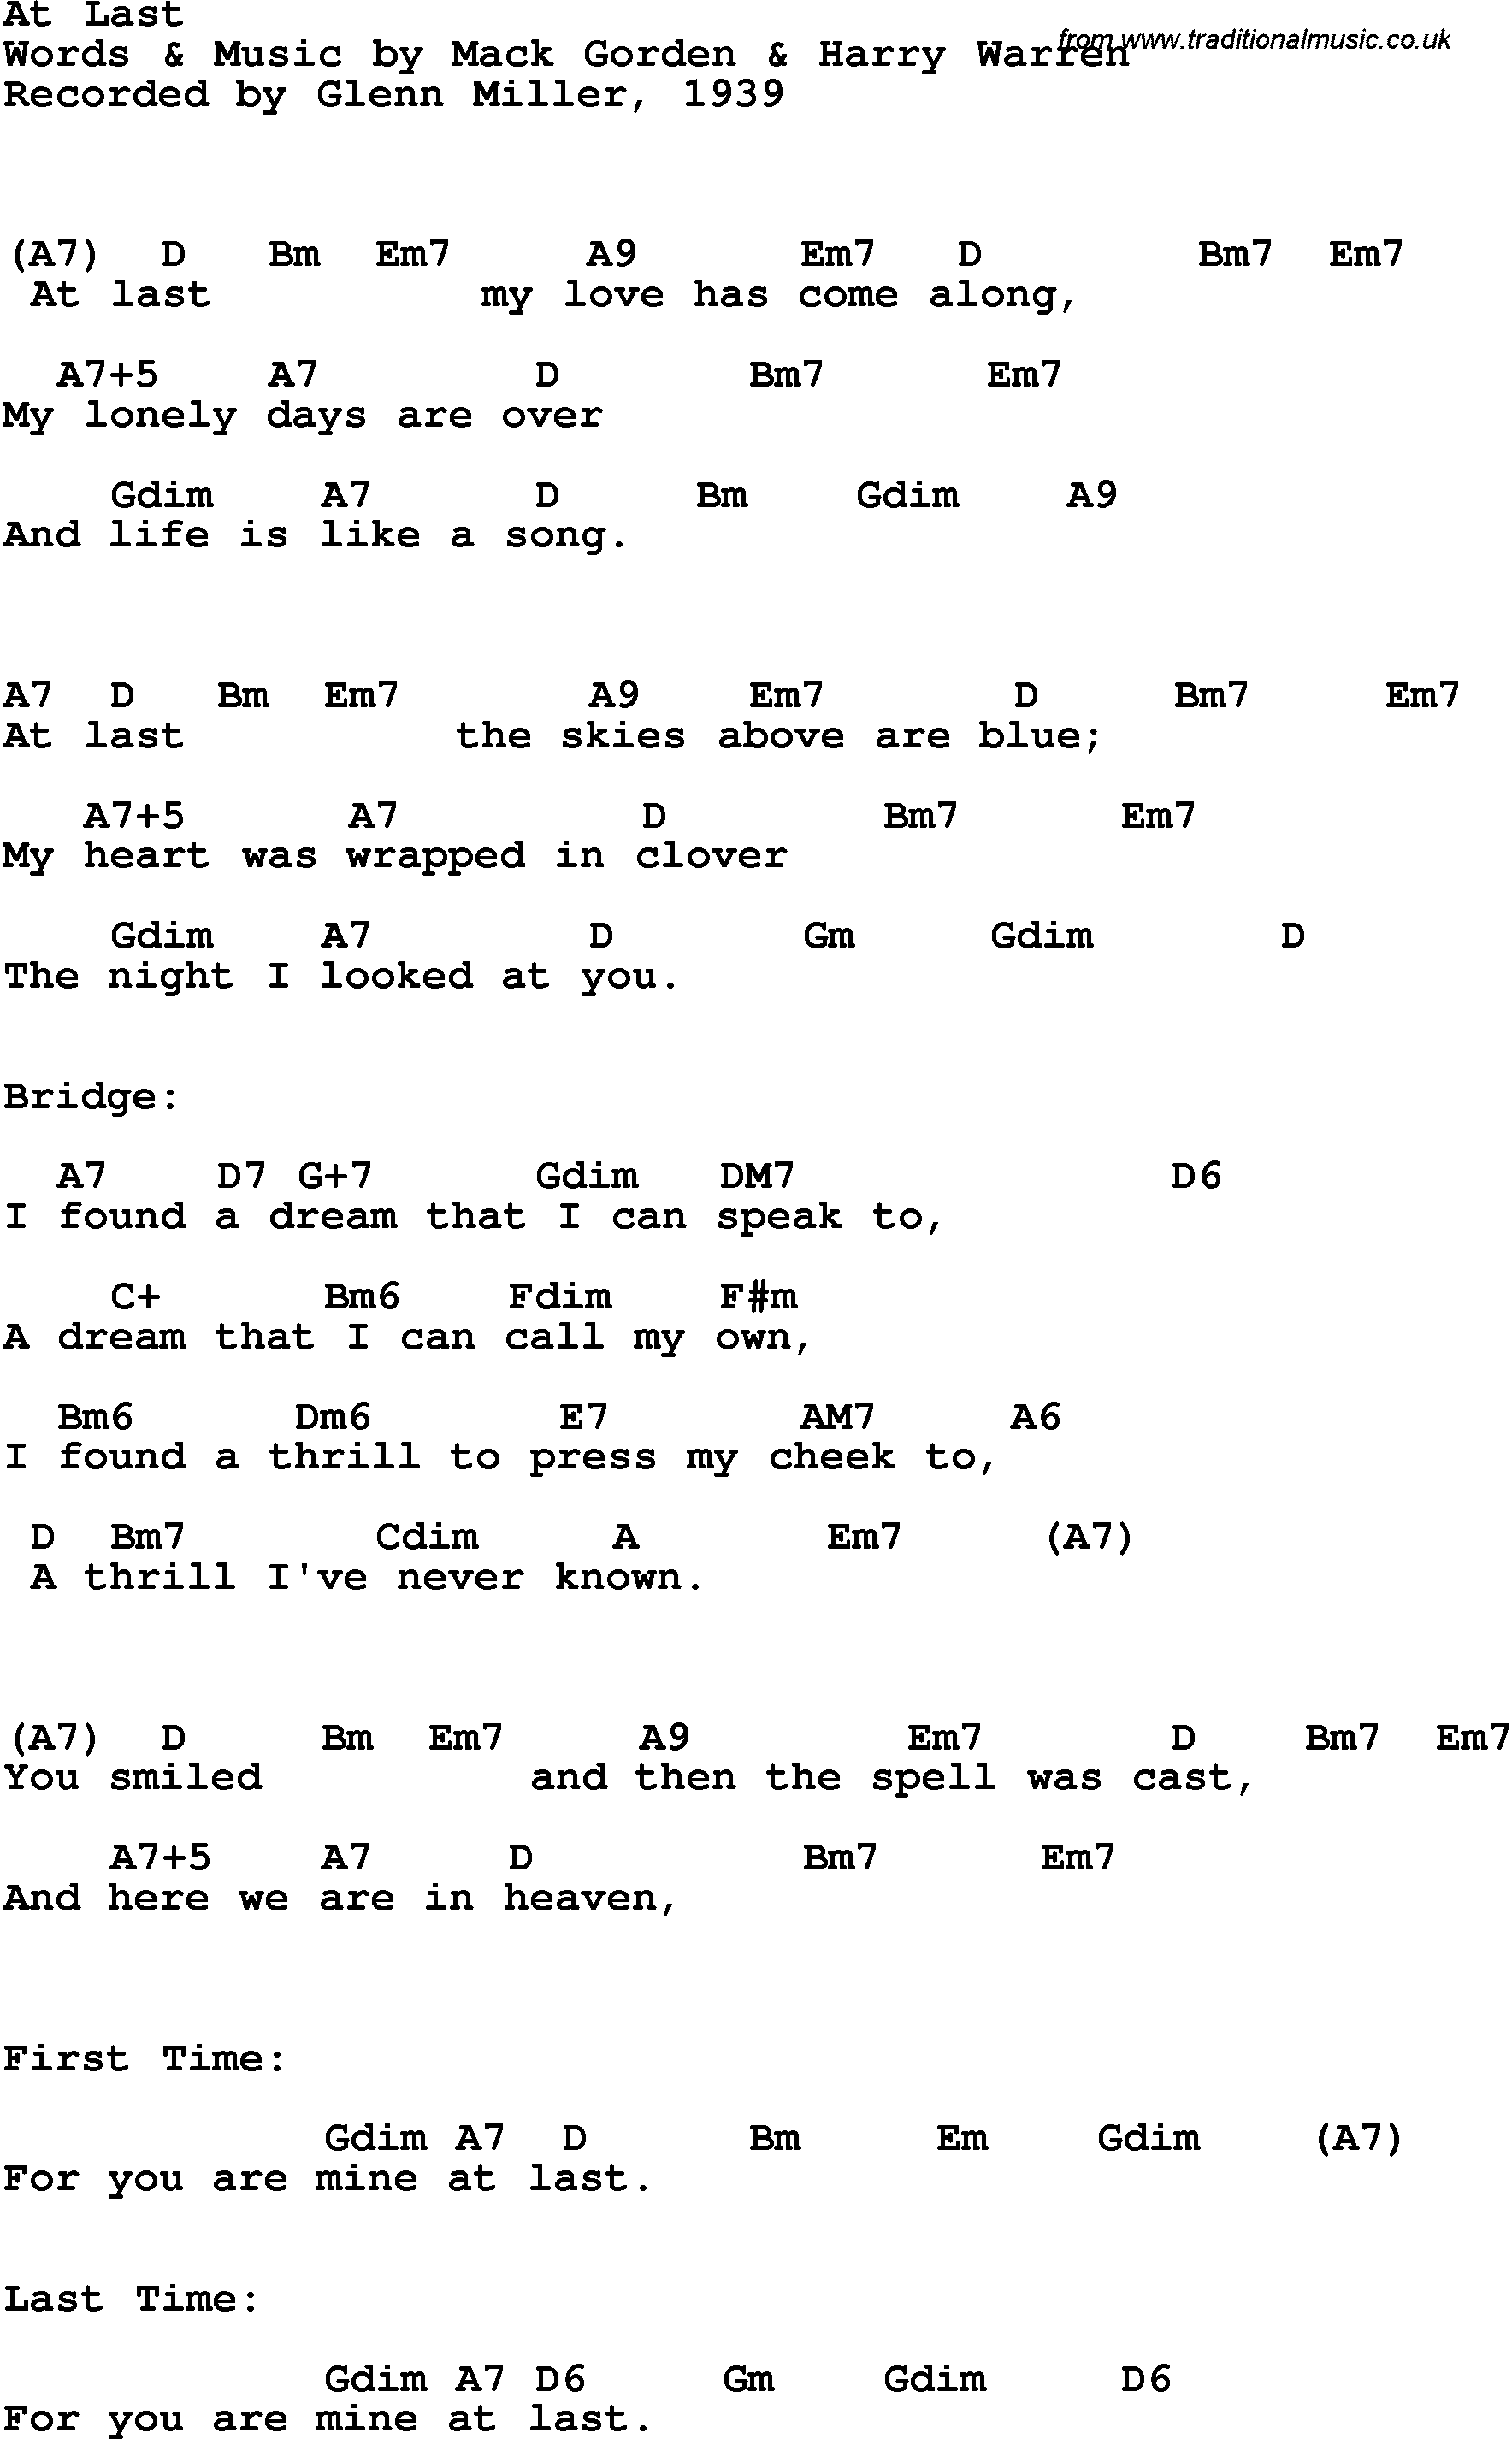 Song Lyrics with guitar chords for At Last - Glenn Miller, 1939